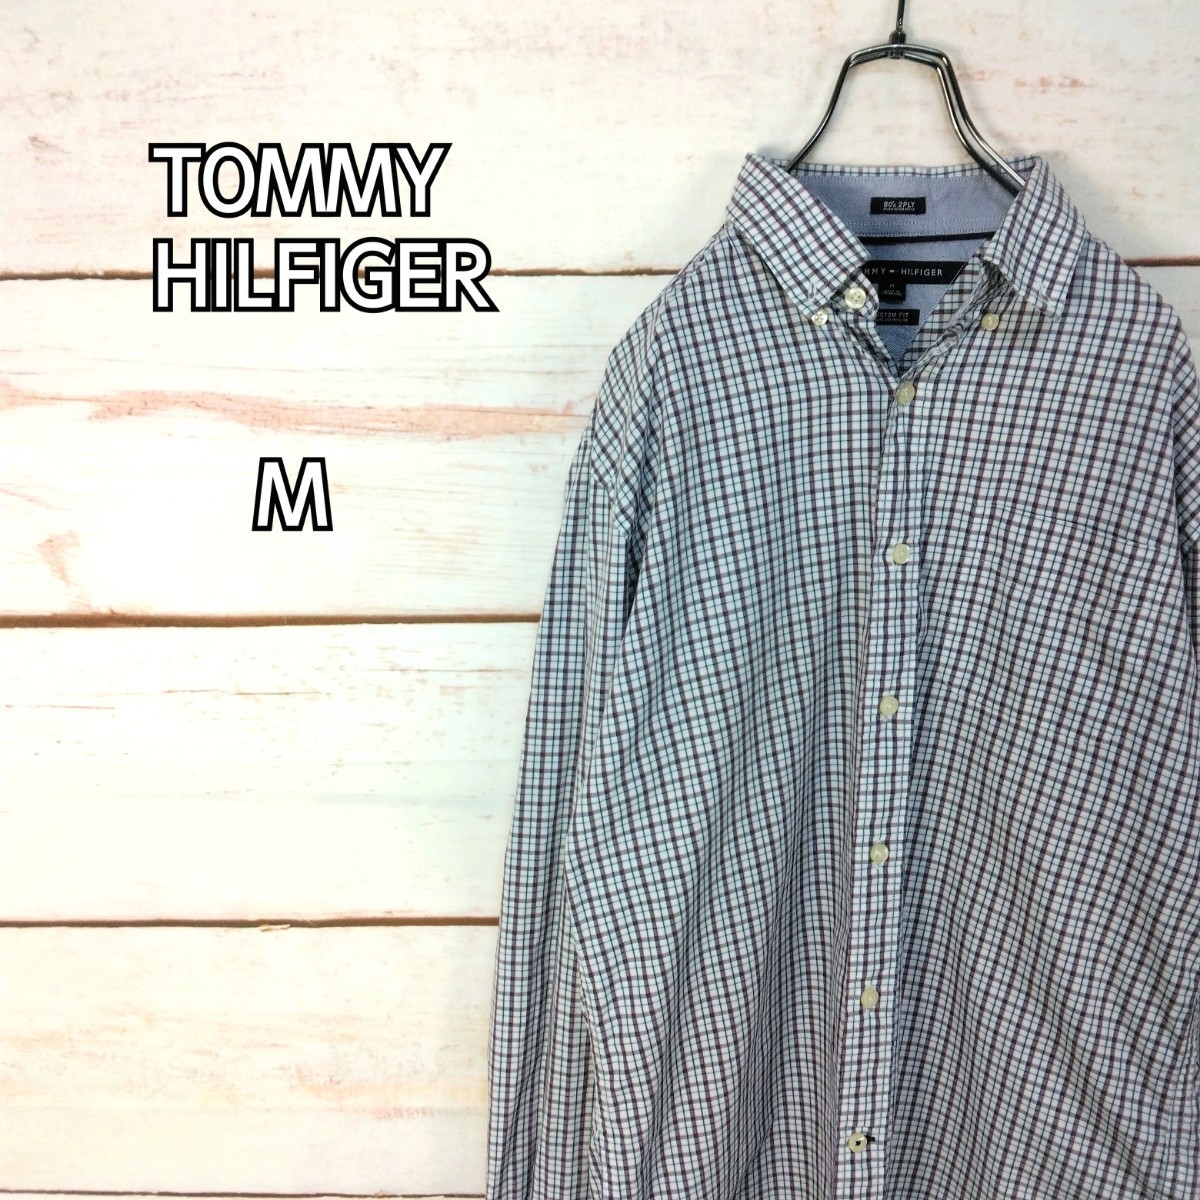 TOMMY HILFIGER トミーヒルフィガー 長袖ボタンダウンシャツ フラッグ刺繍 チェック柄 メンズ Mサイズの画像1